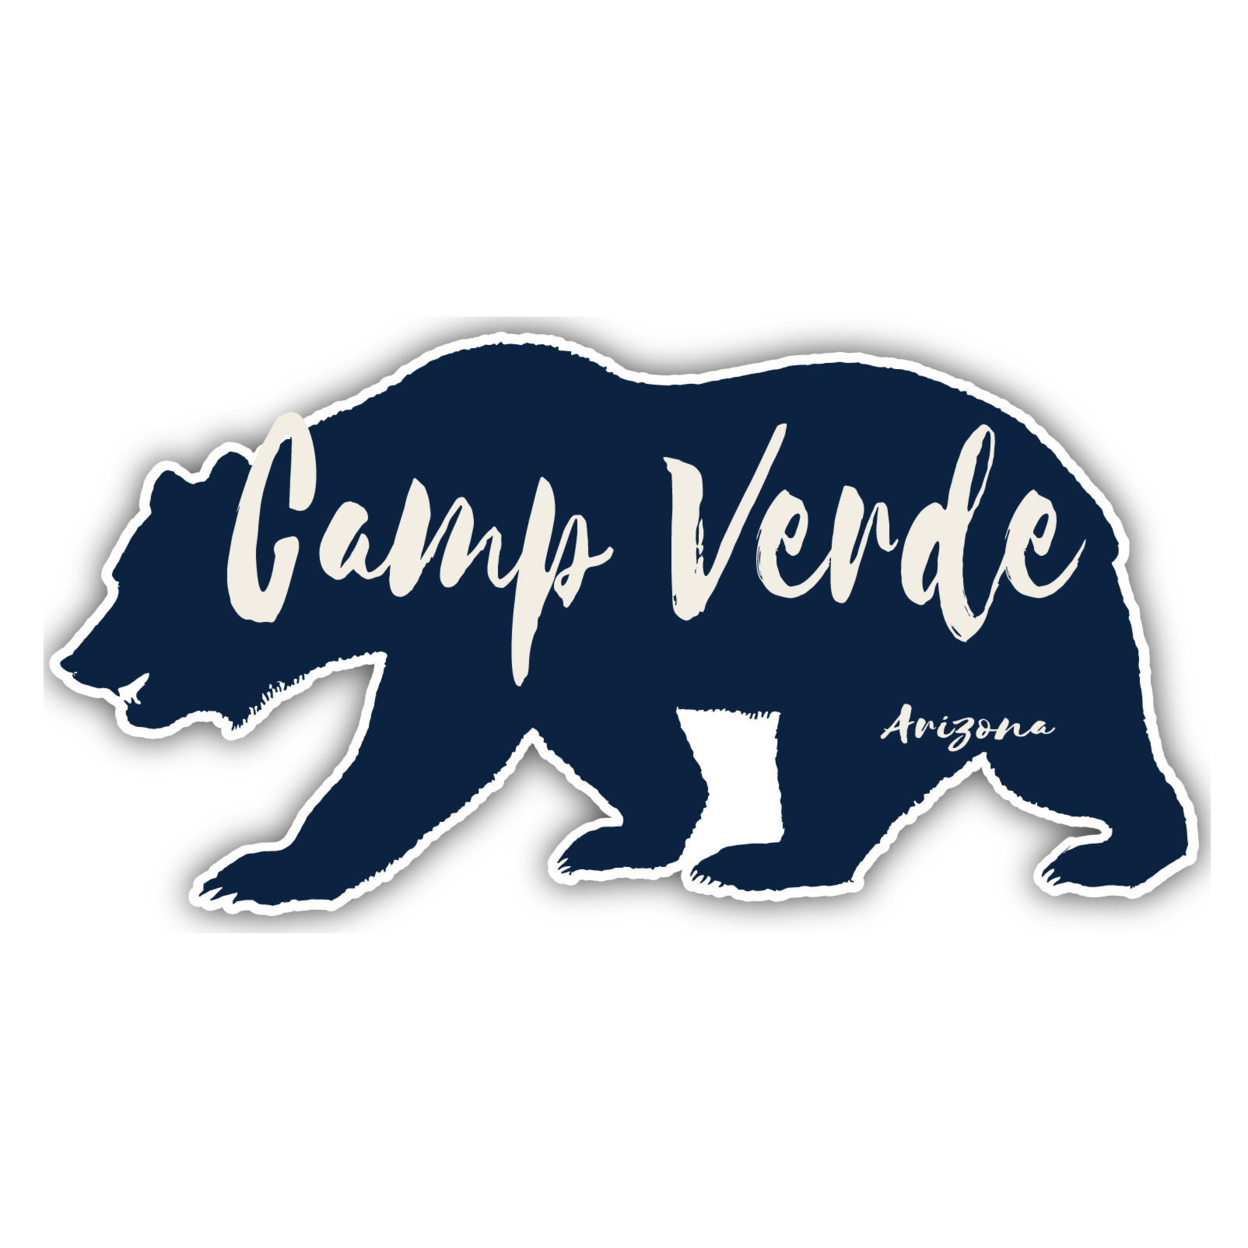 Camp Verde Arizona Souvenir Decorative Stickers (Choose Theme And Size) - Single Unit, 8-Inch, Camp Life